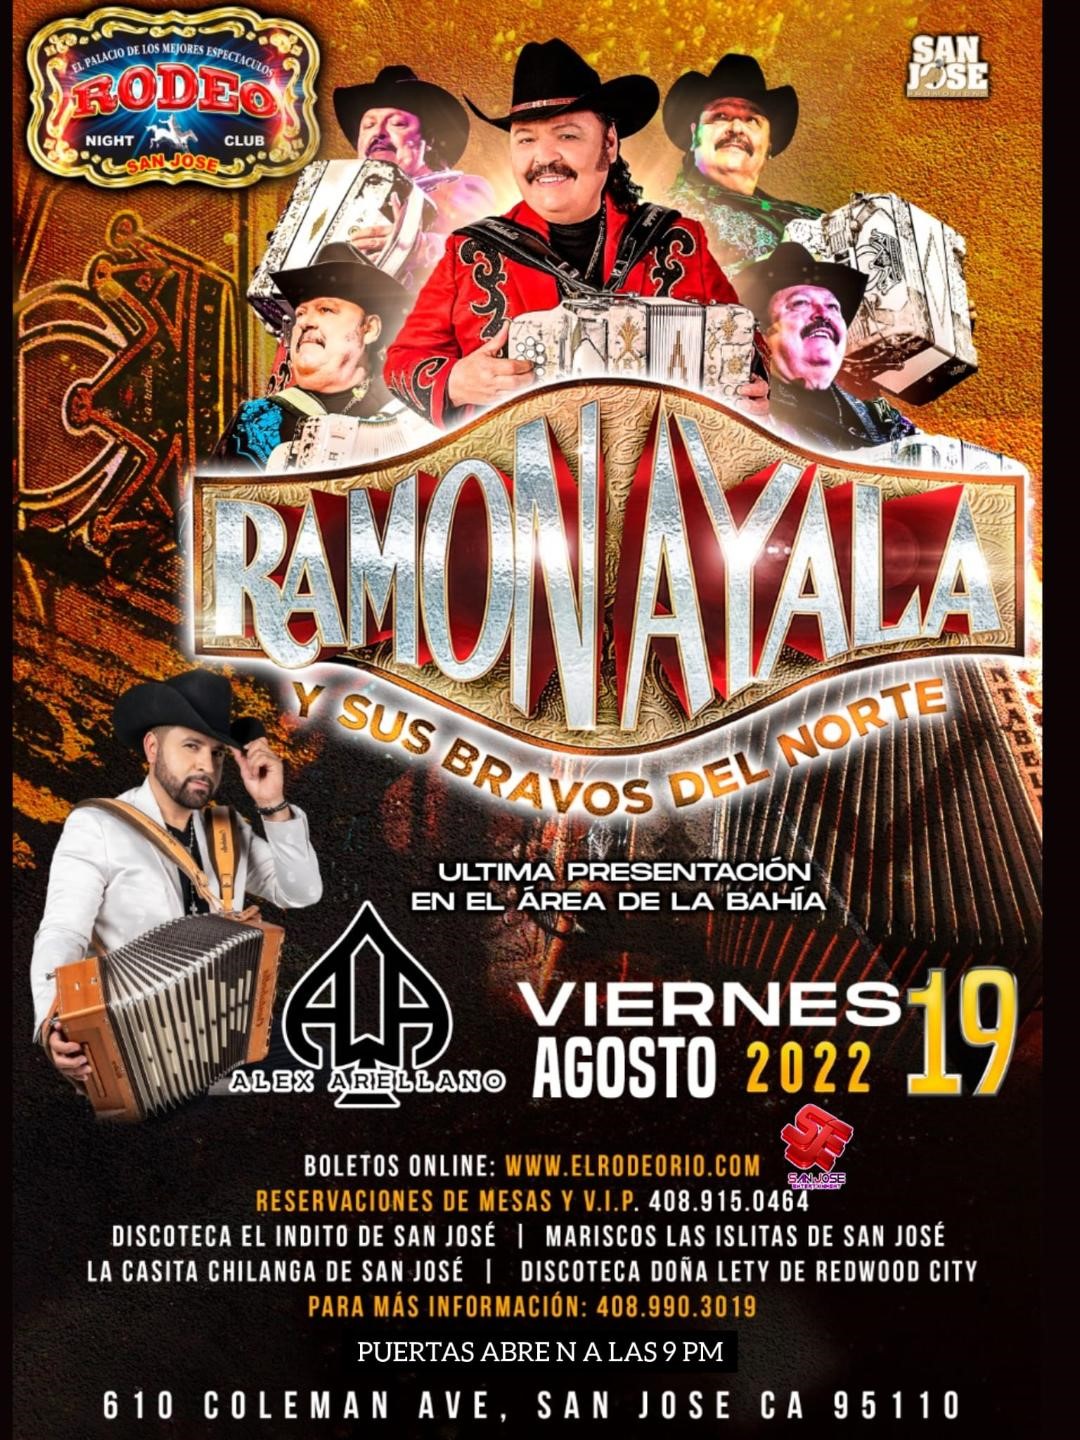 Ramon Ayala y sus Bravos del Norte,Club Rodeo  on ago. 19, 21:00@Club Rodeo - Buy tickets and Get information on elrodeorio.com sanjoseentertainment